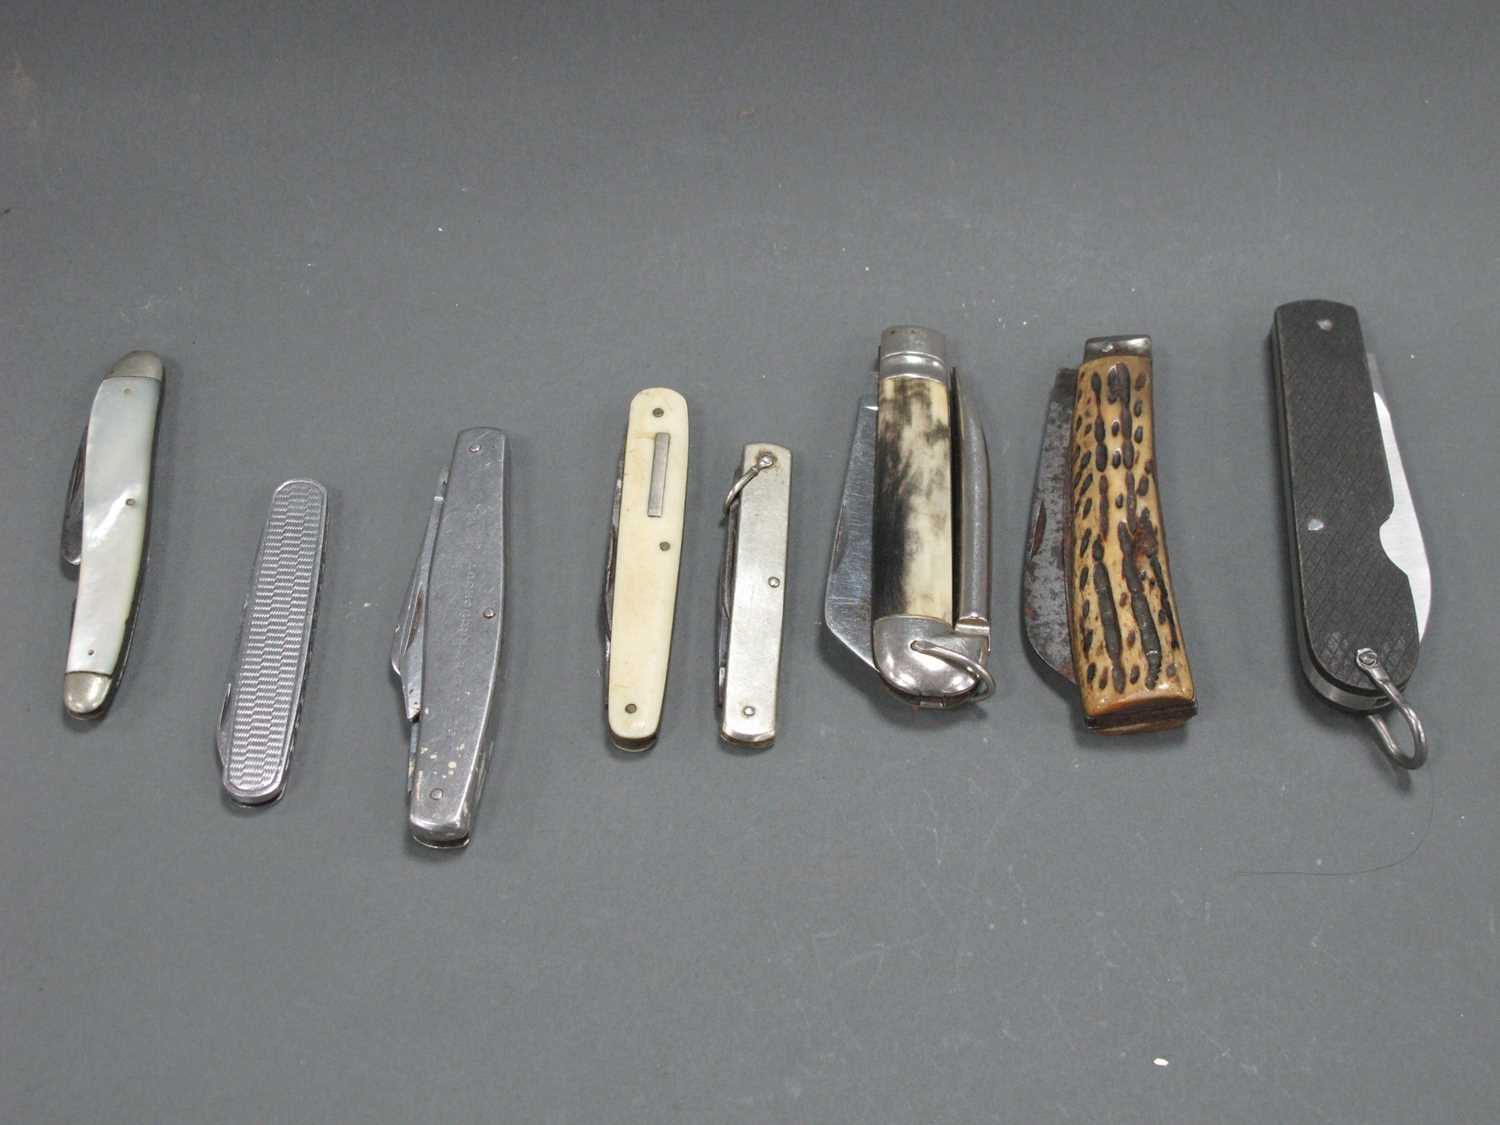 H.M Slater "Venture" Pen Knife, Richards pen knife, etc, and other pen knives. (7).